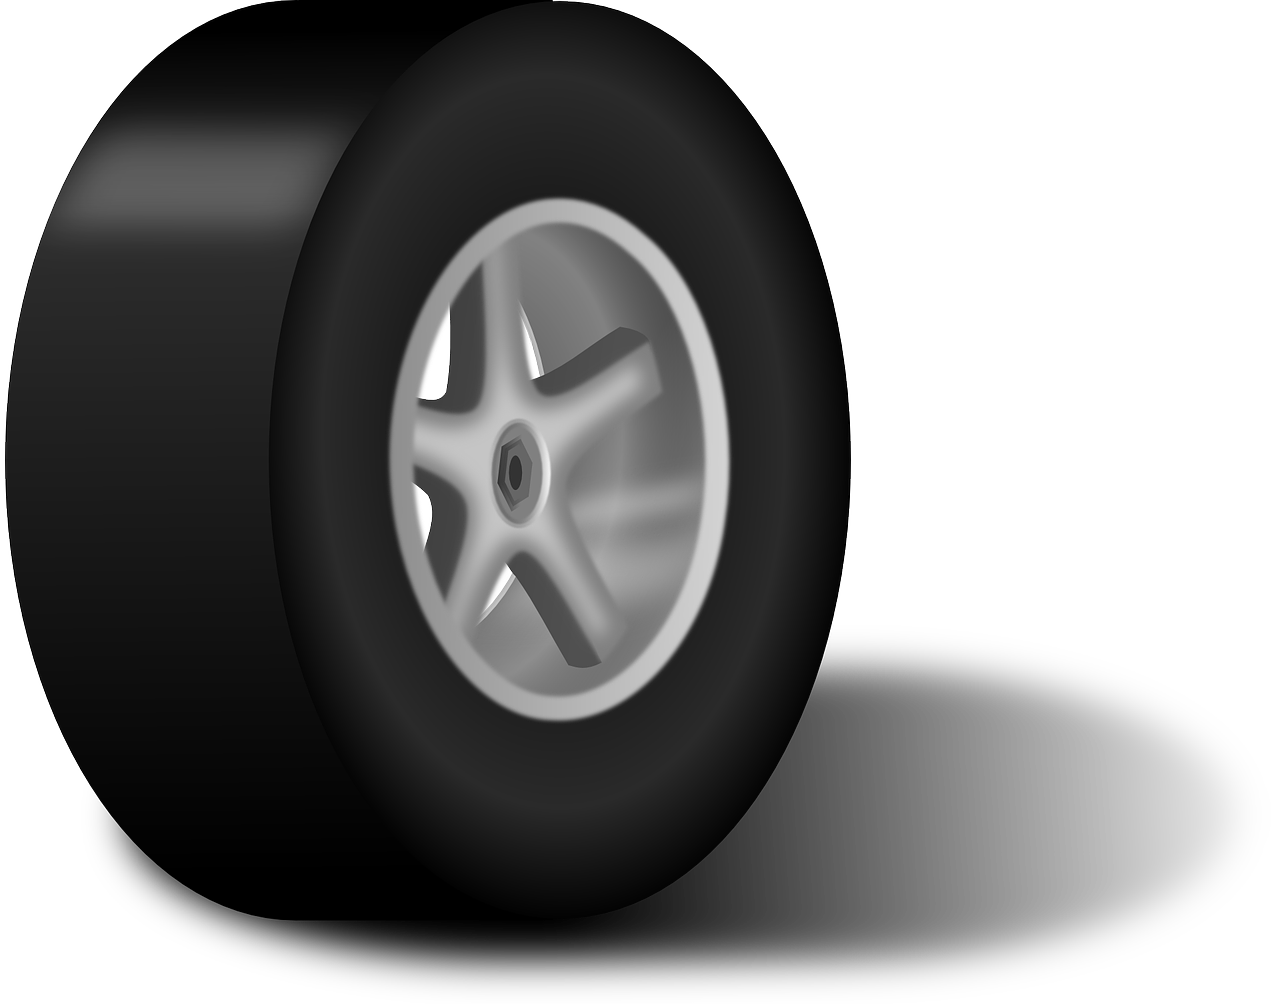 tire wheel car free photo